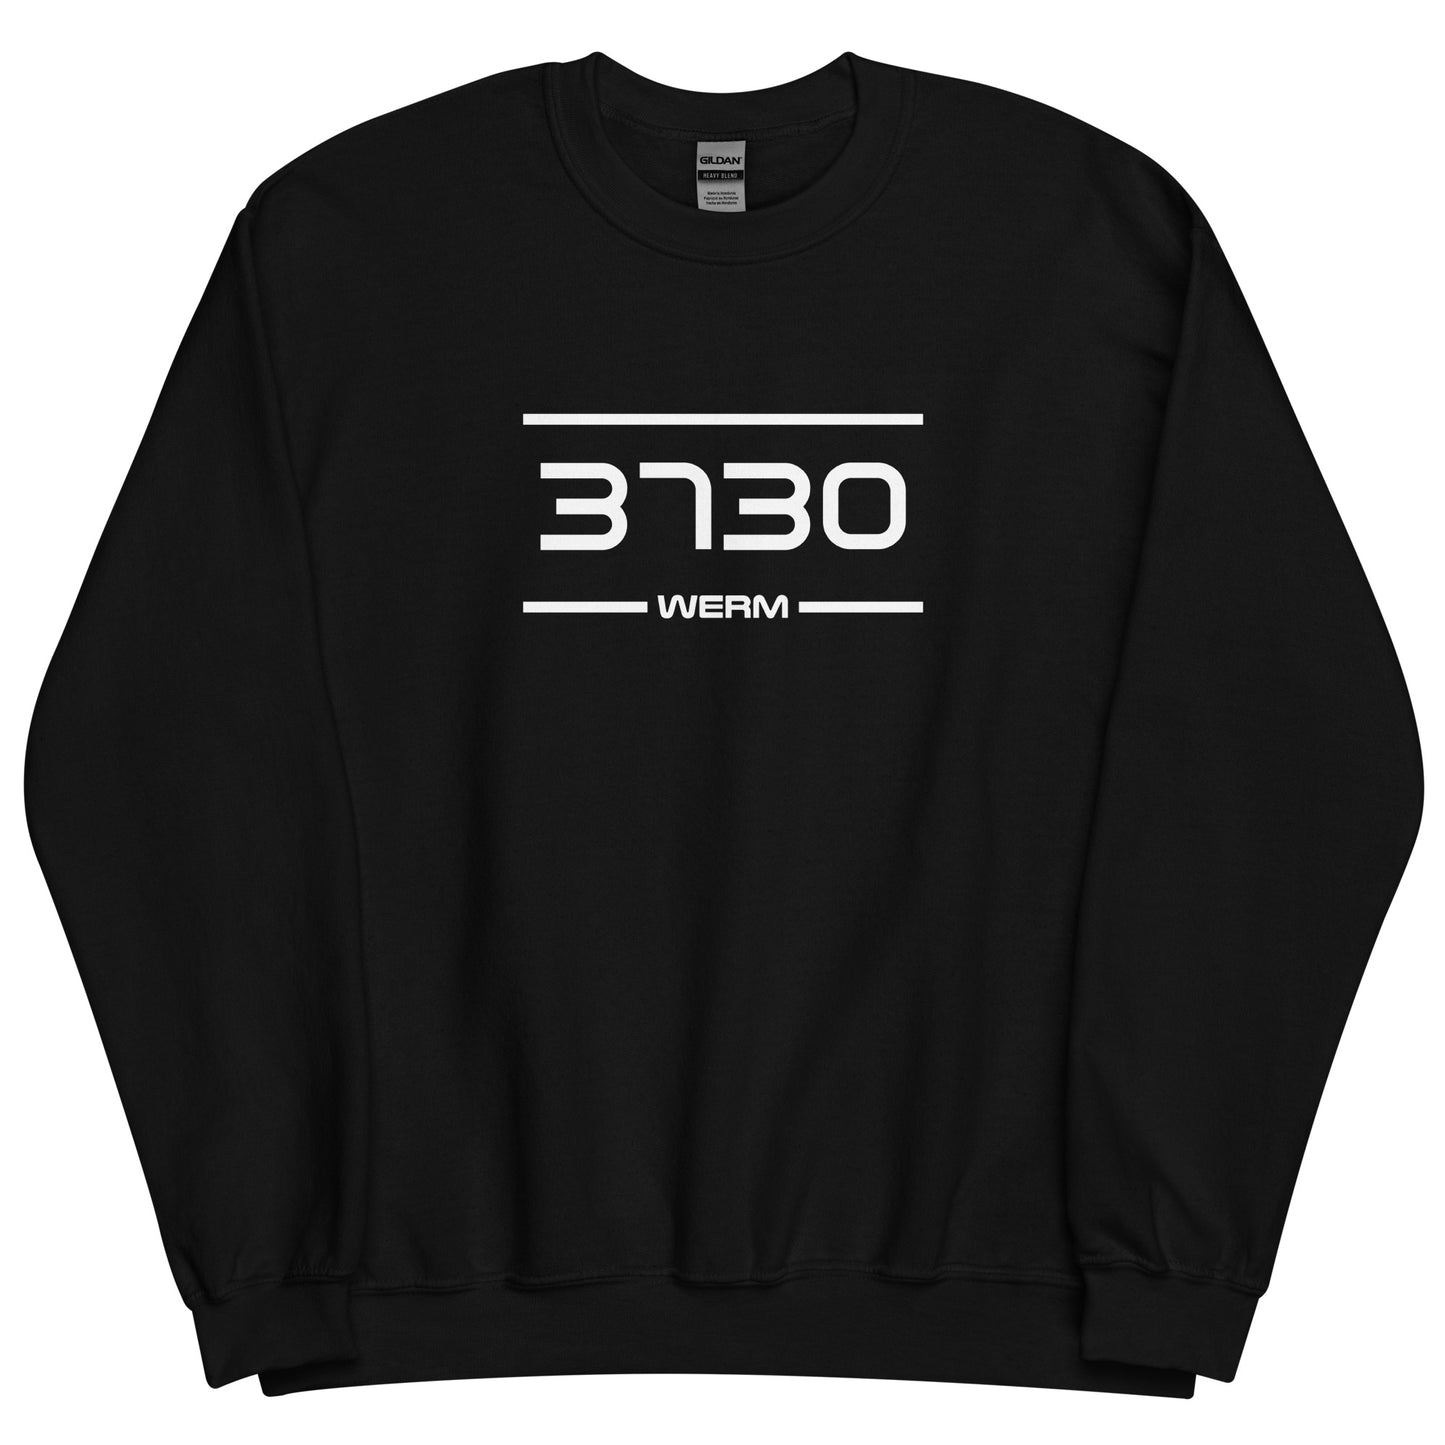 Sweater - 3730 - Werm (M/V)